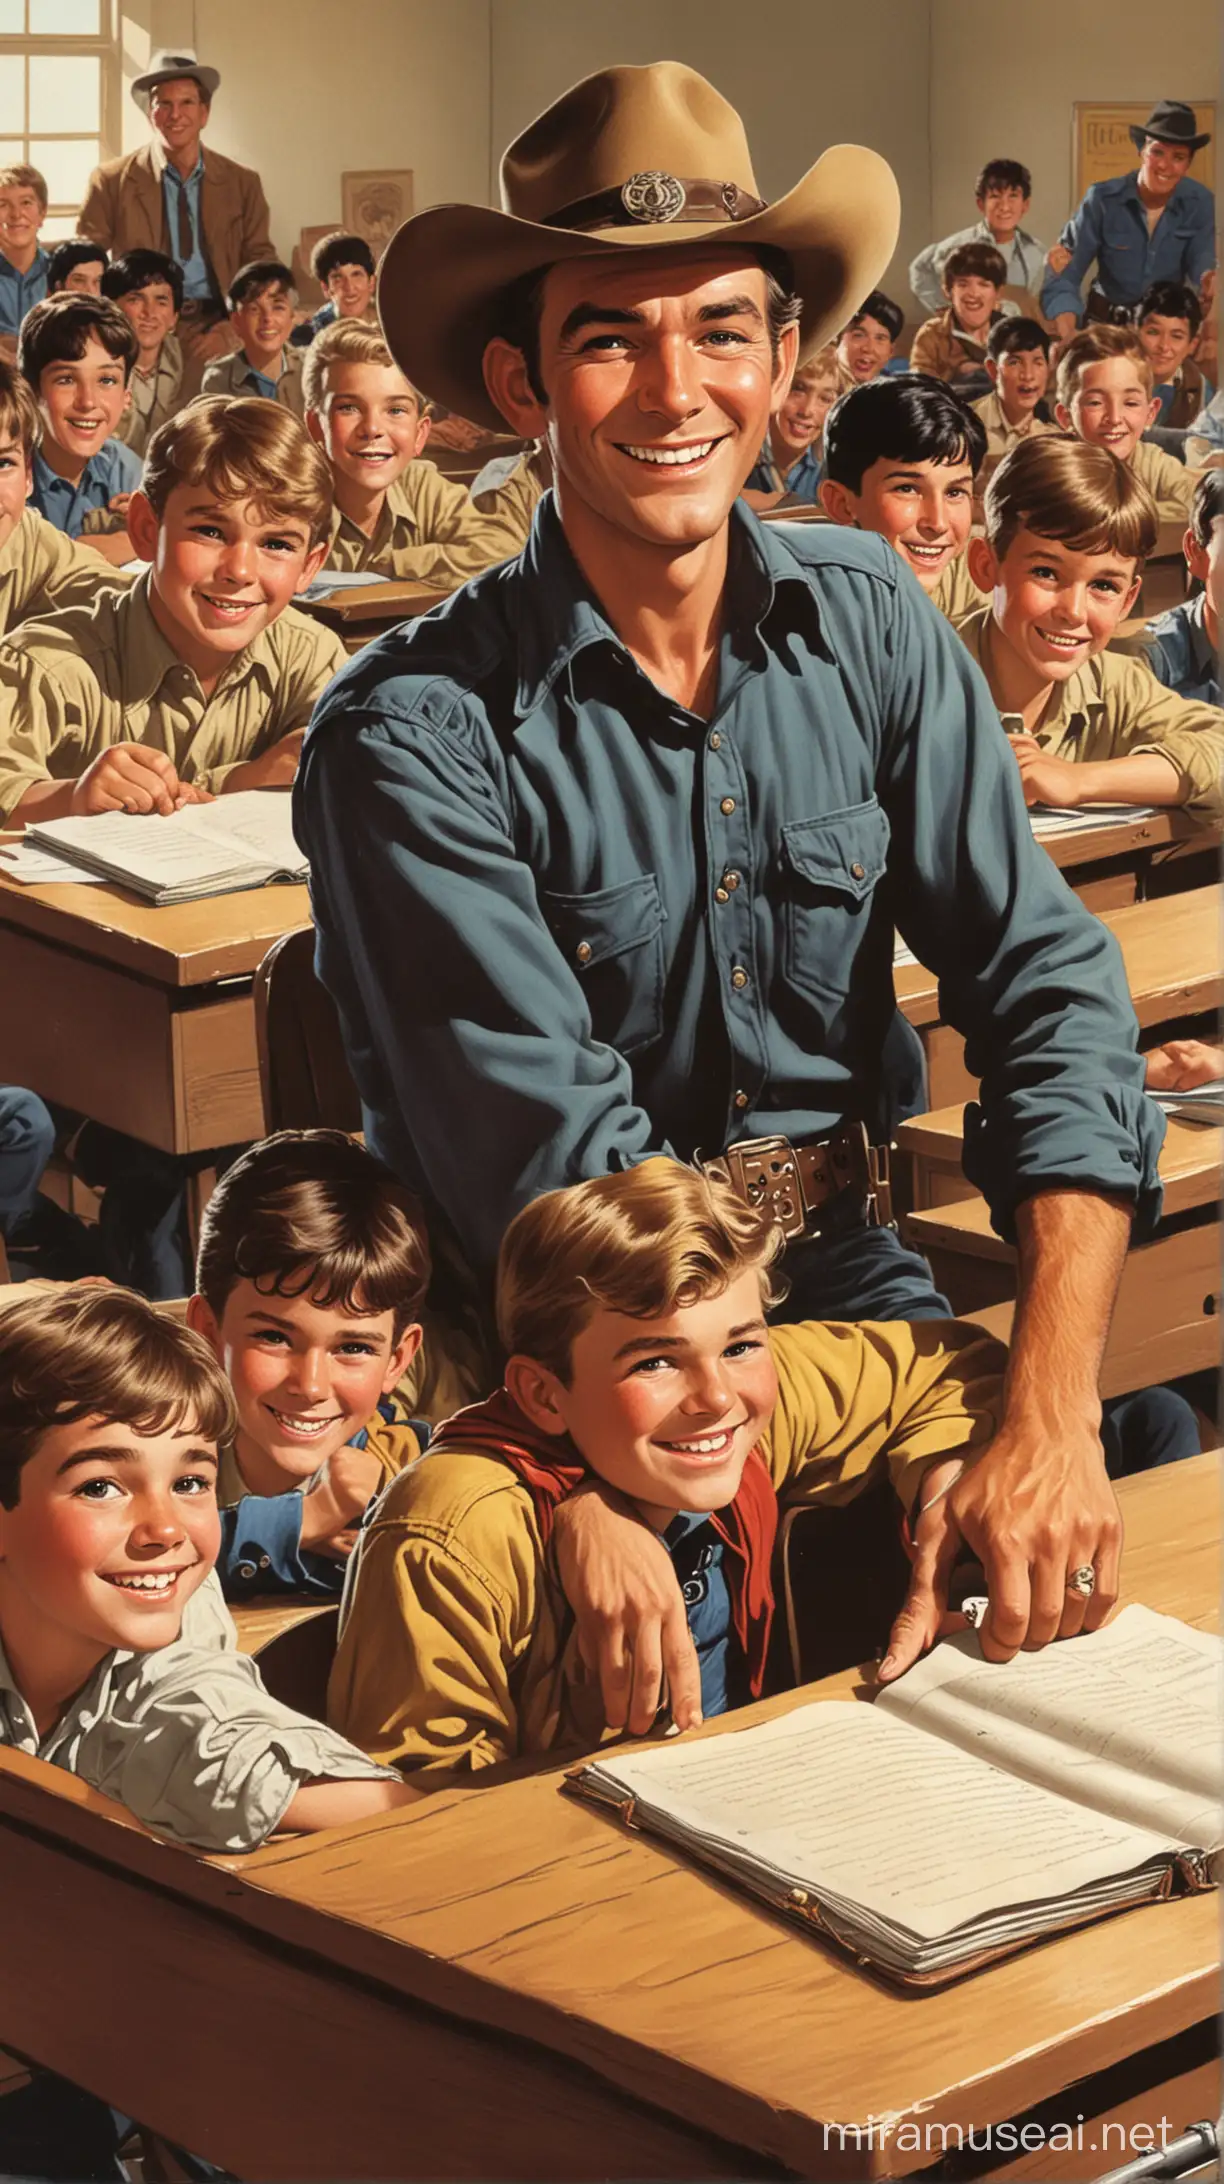 Joyful Classroom Scene with Tex Willer and Smiling Boys